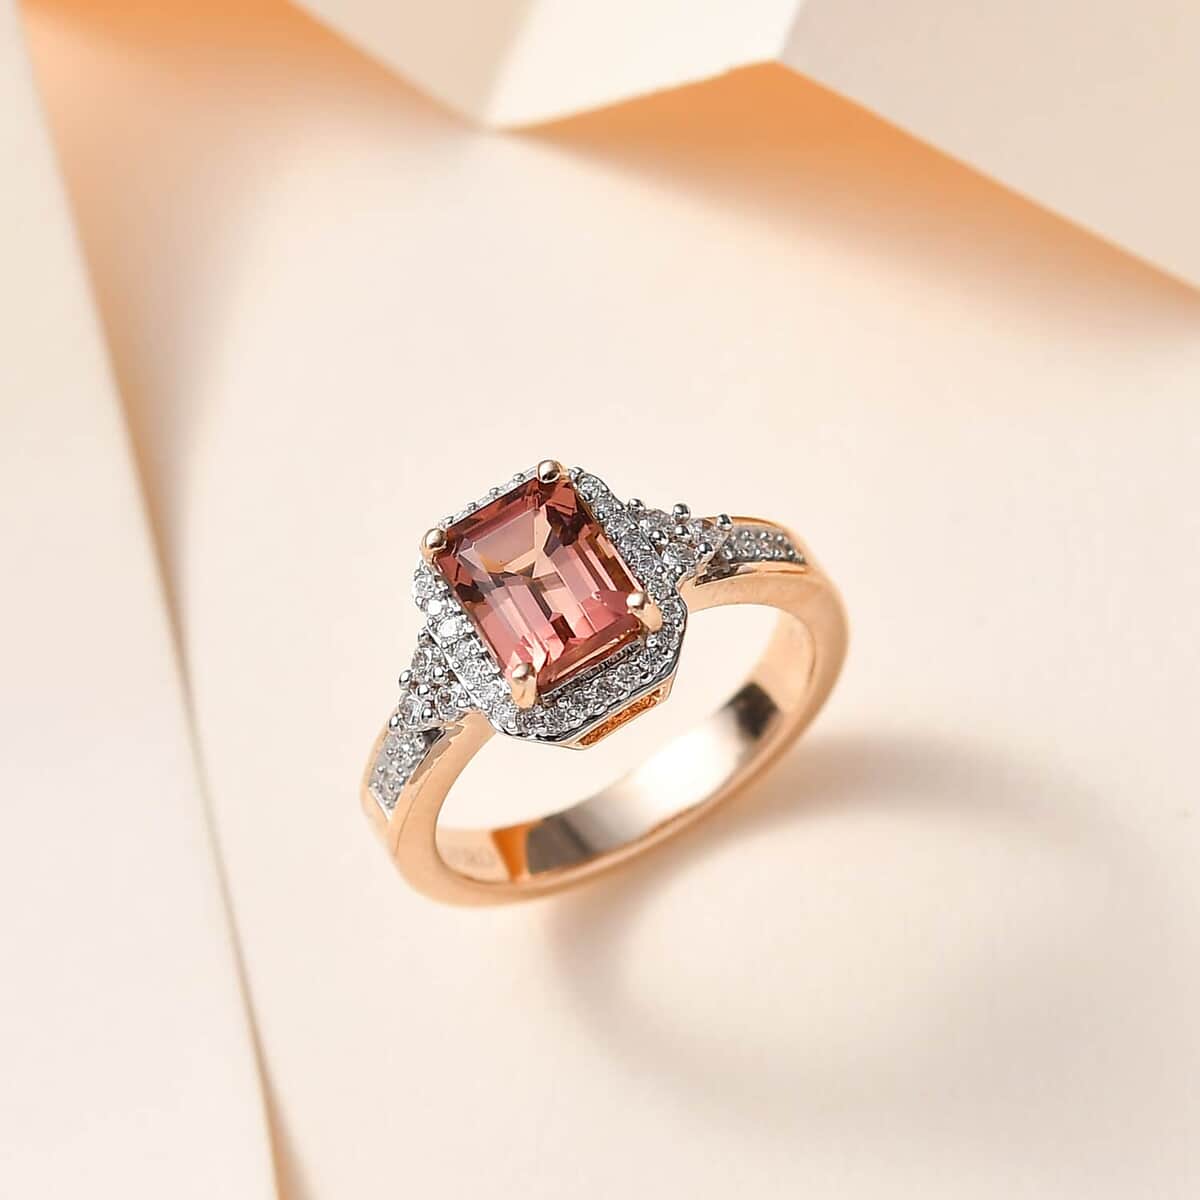 Luxoro 10K Rose Gold Premium Blush Tourmaline and G-H I2 Diamond Halo Ring (Size 6.5) 4.75 Grams 2.10 ctw image number 1